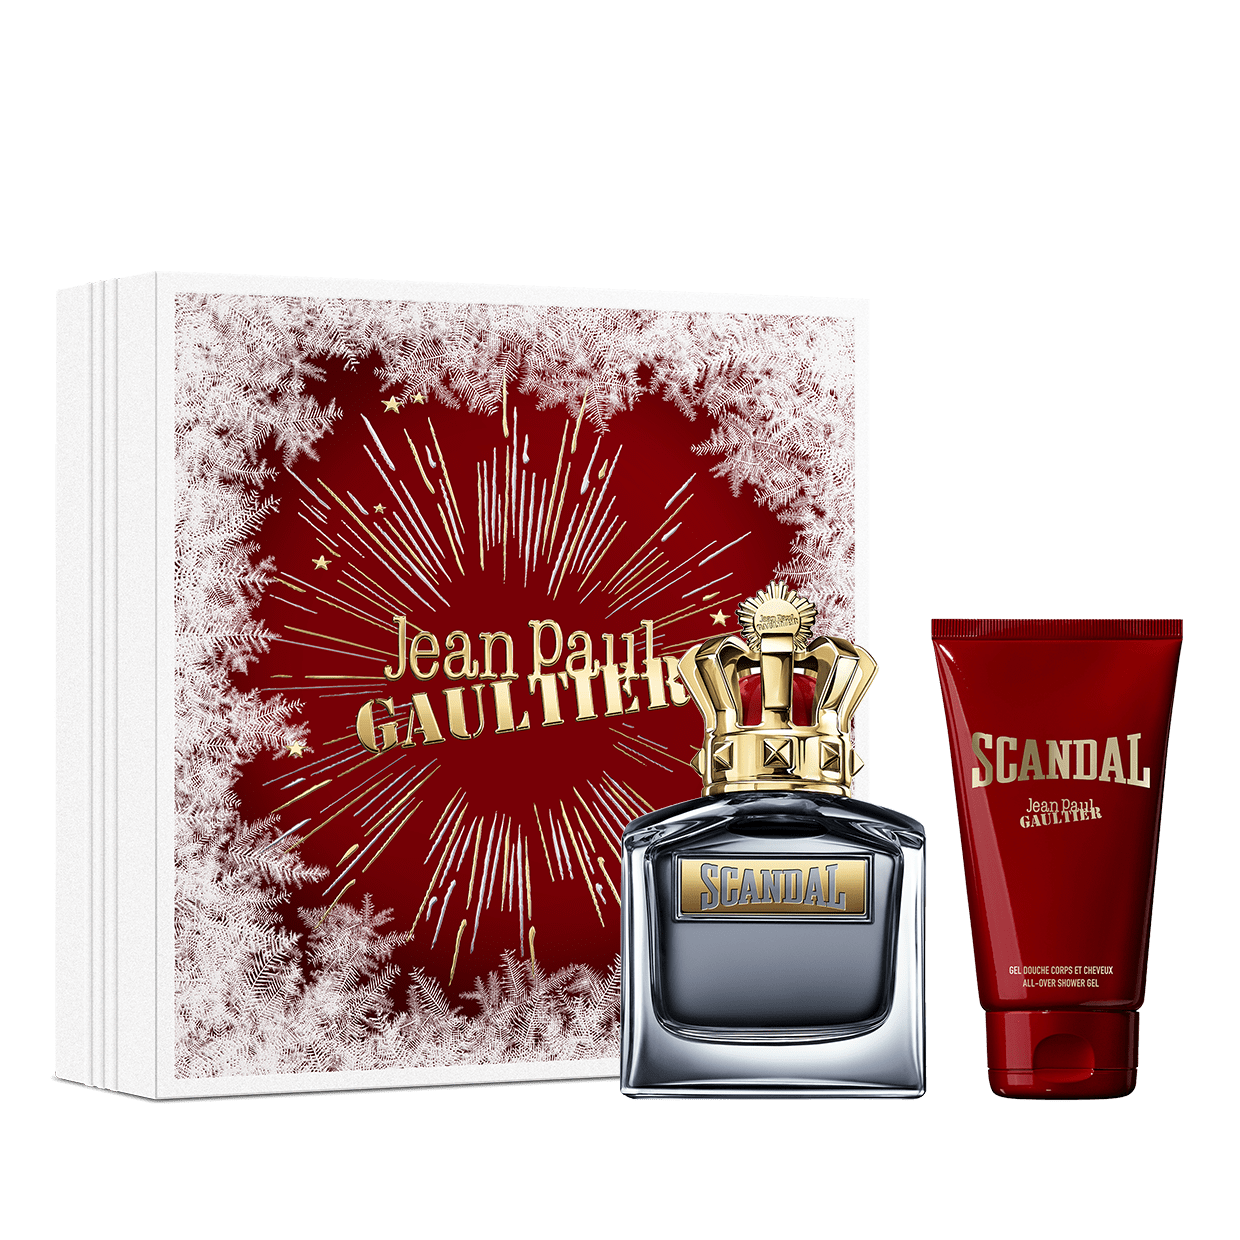 Scandal Pour Homme Jean Paul Gaultier cologne - a fragrance for